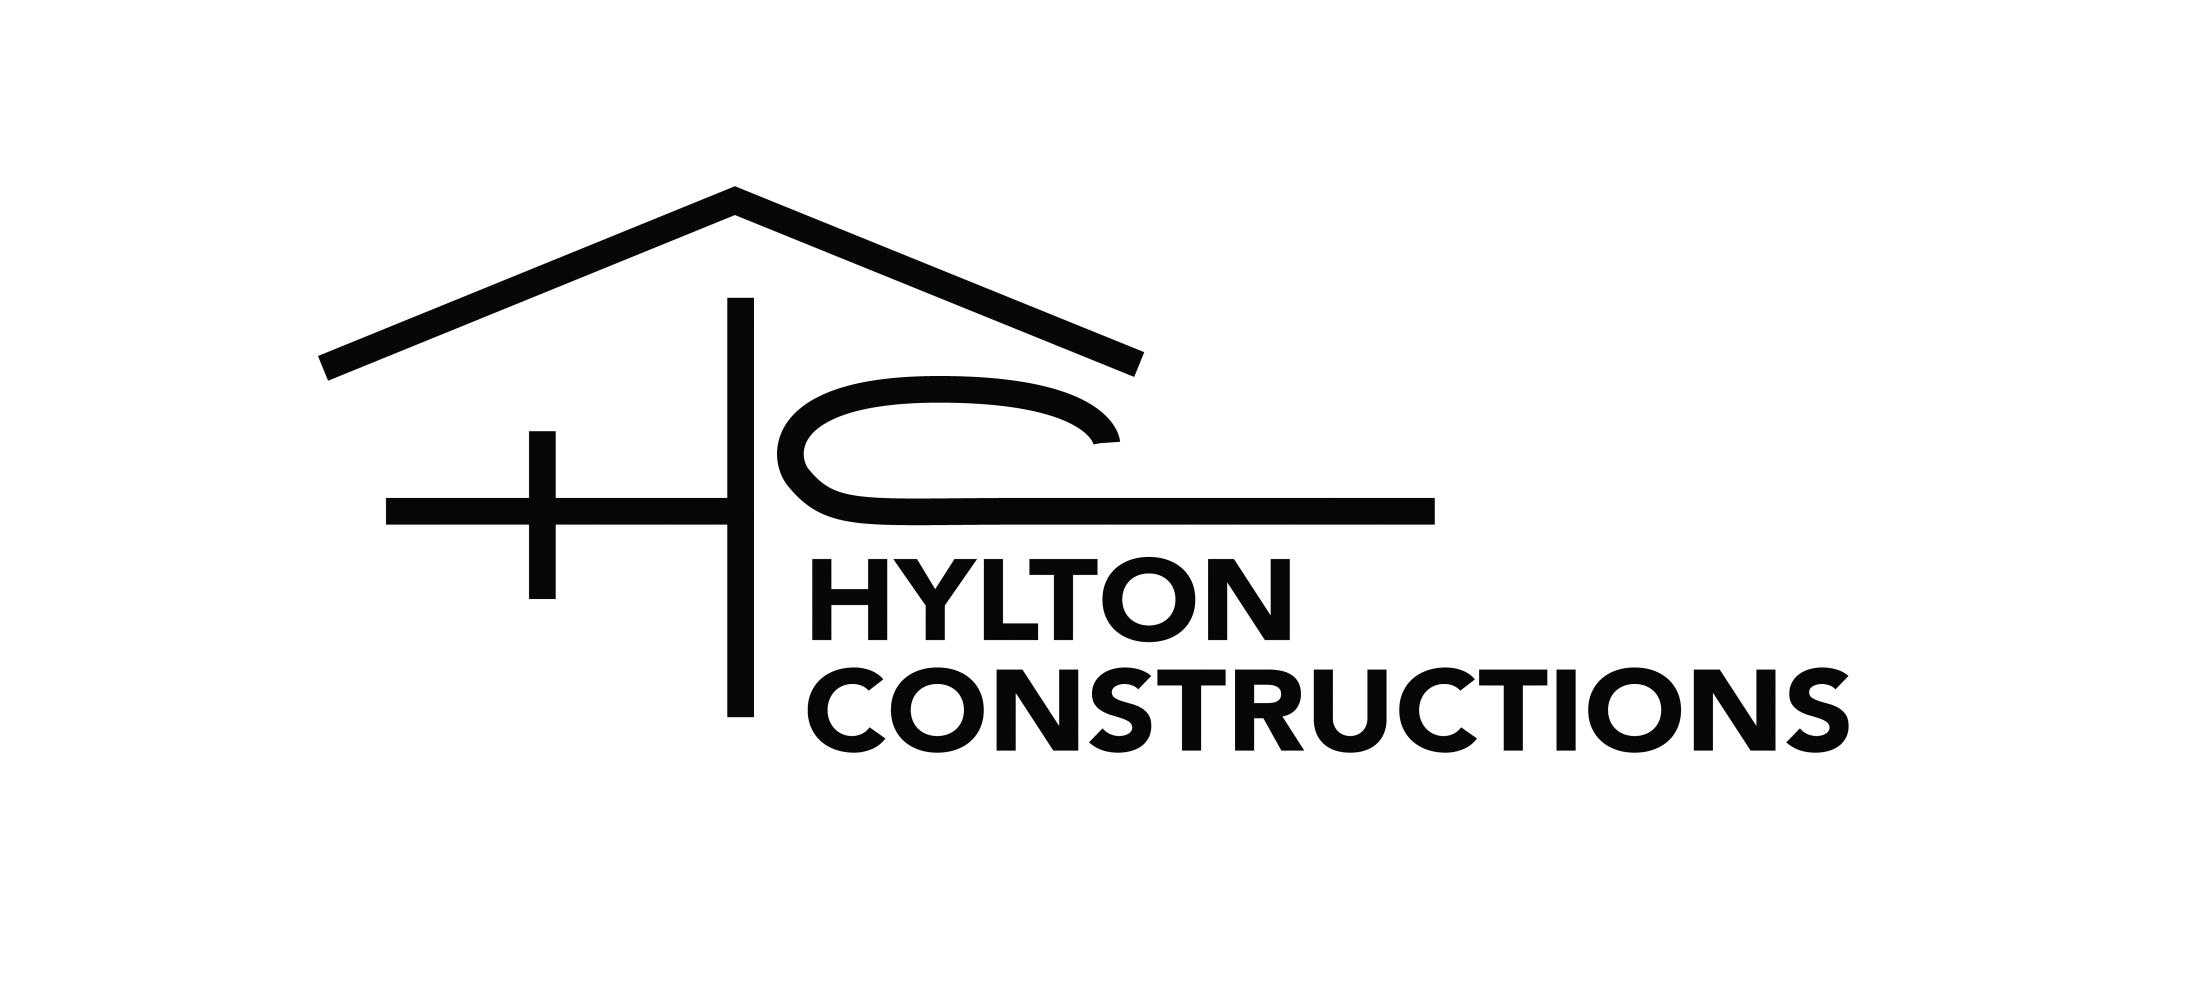 Construction Hylton 